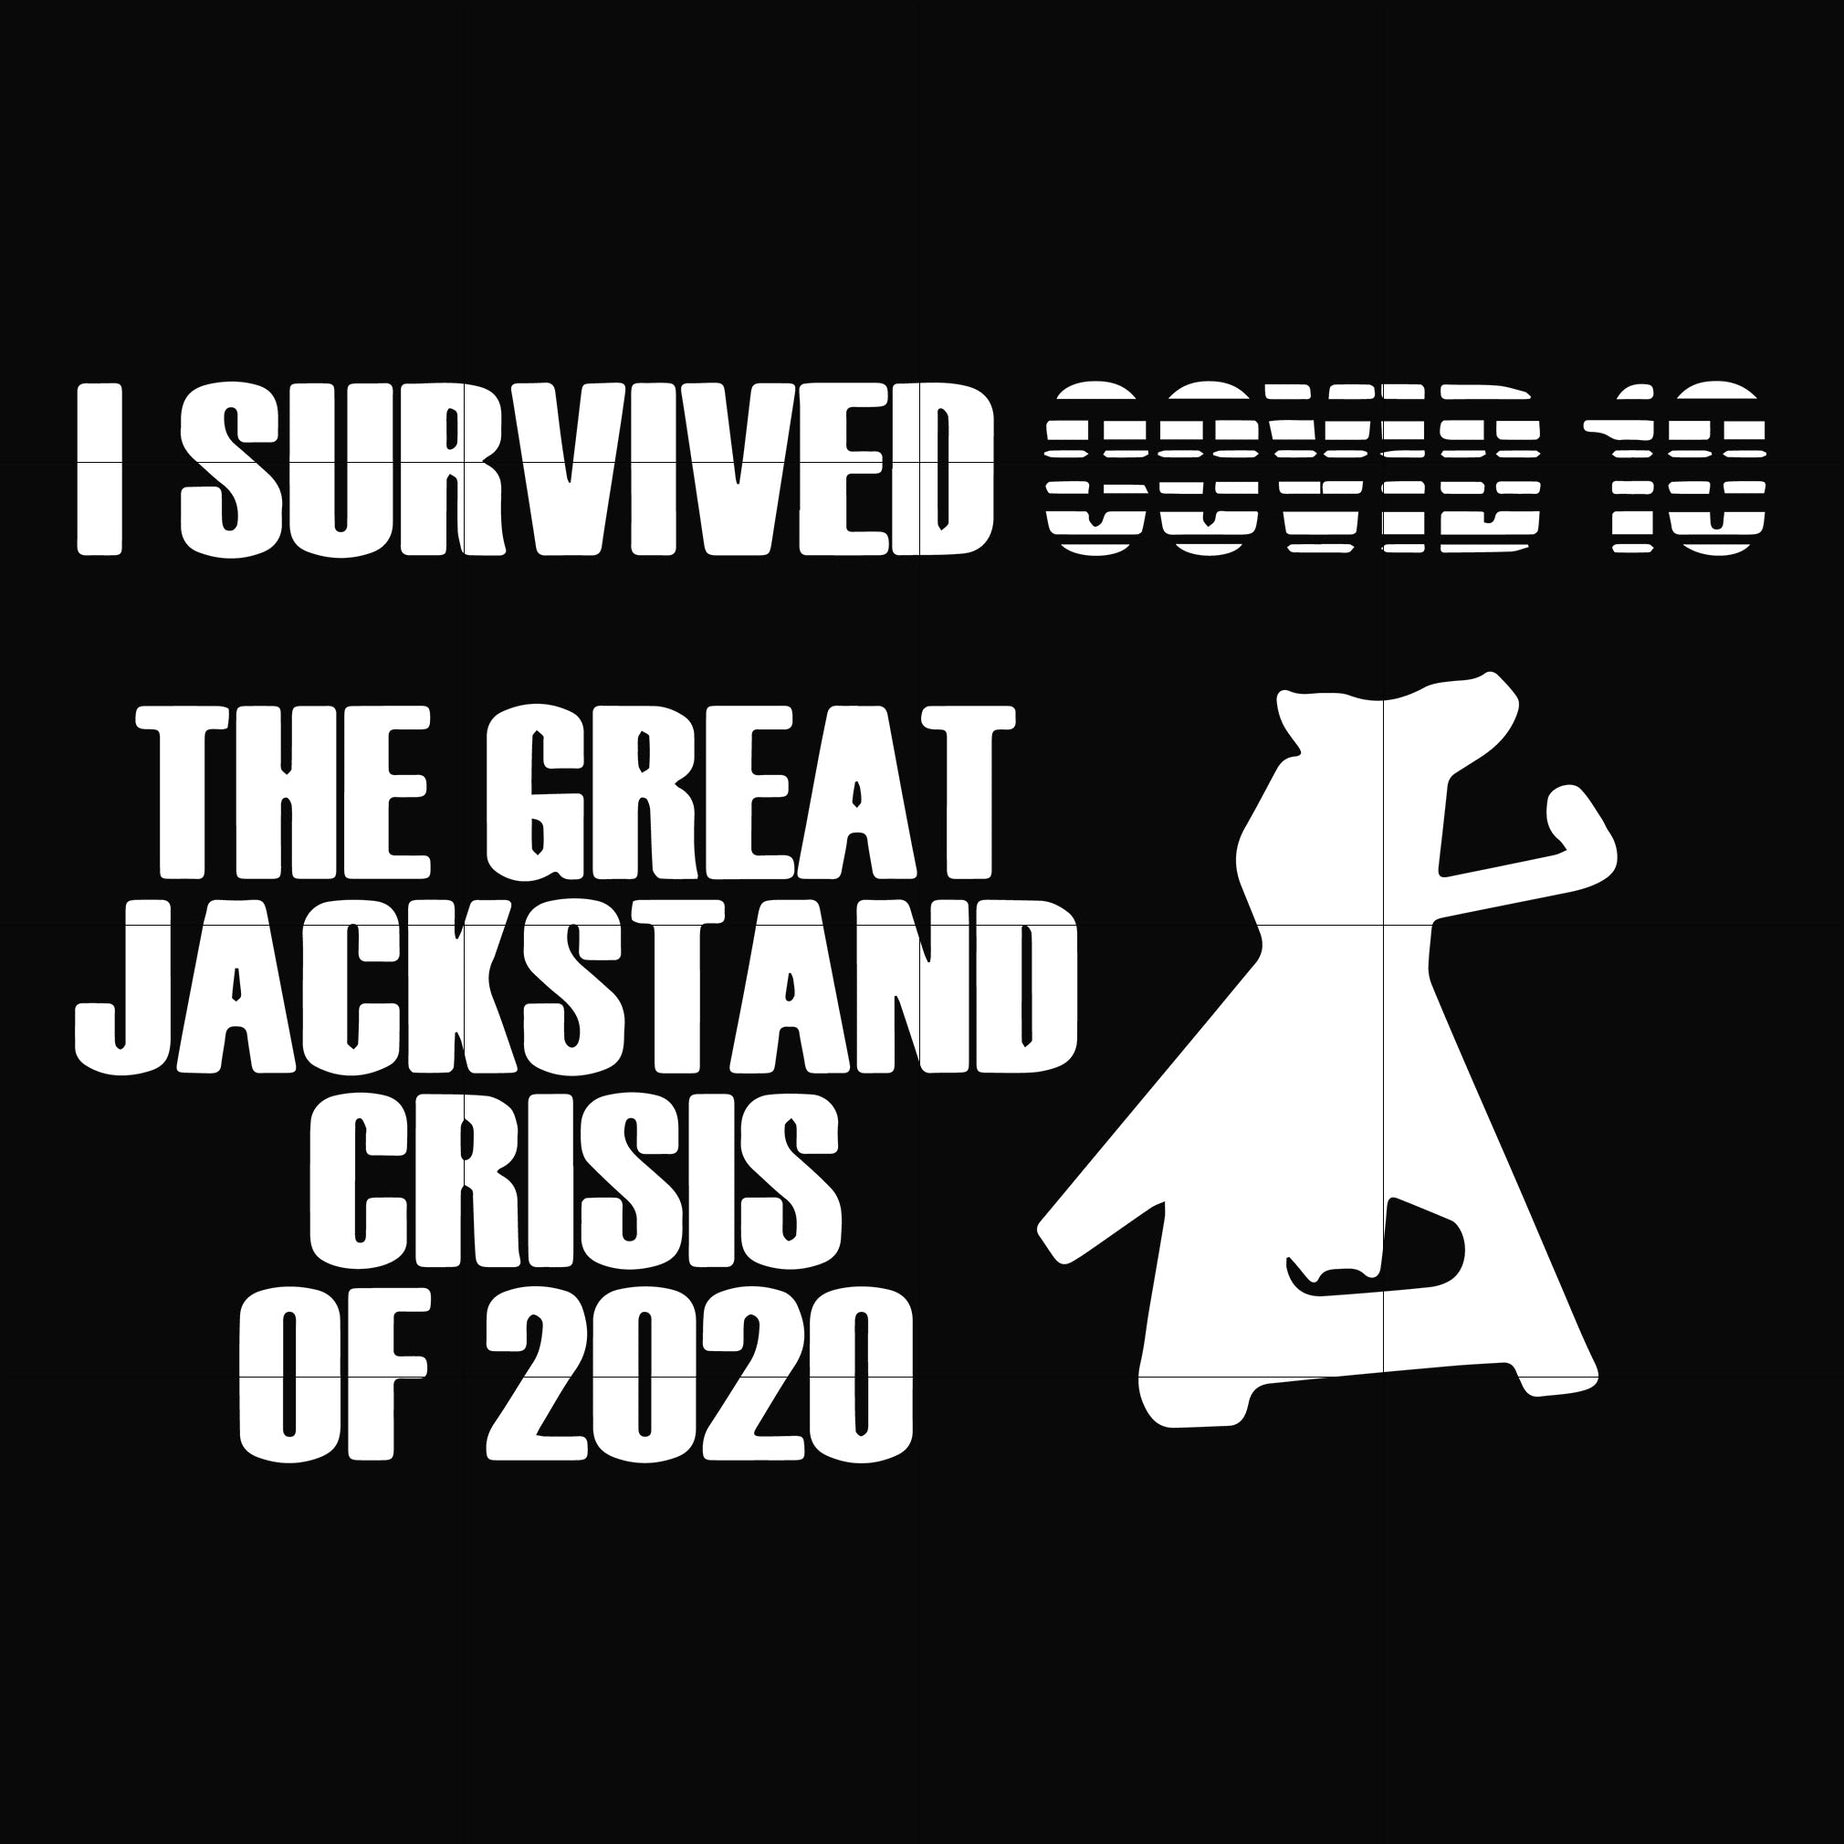 I survived covid 10 the great jackstand crisis of 2020 svg, png, dxf, eps digital file TD112